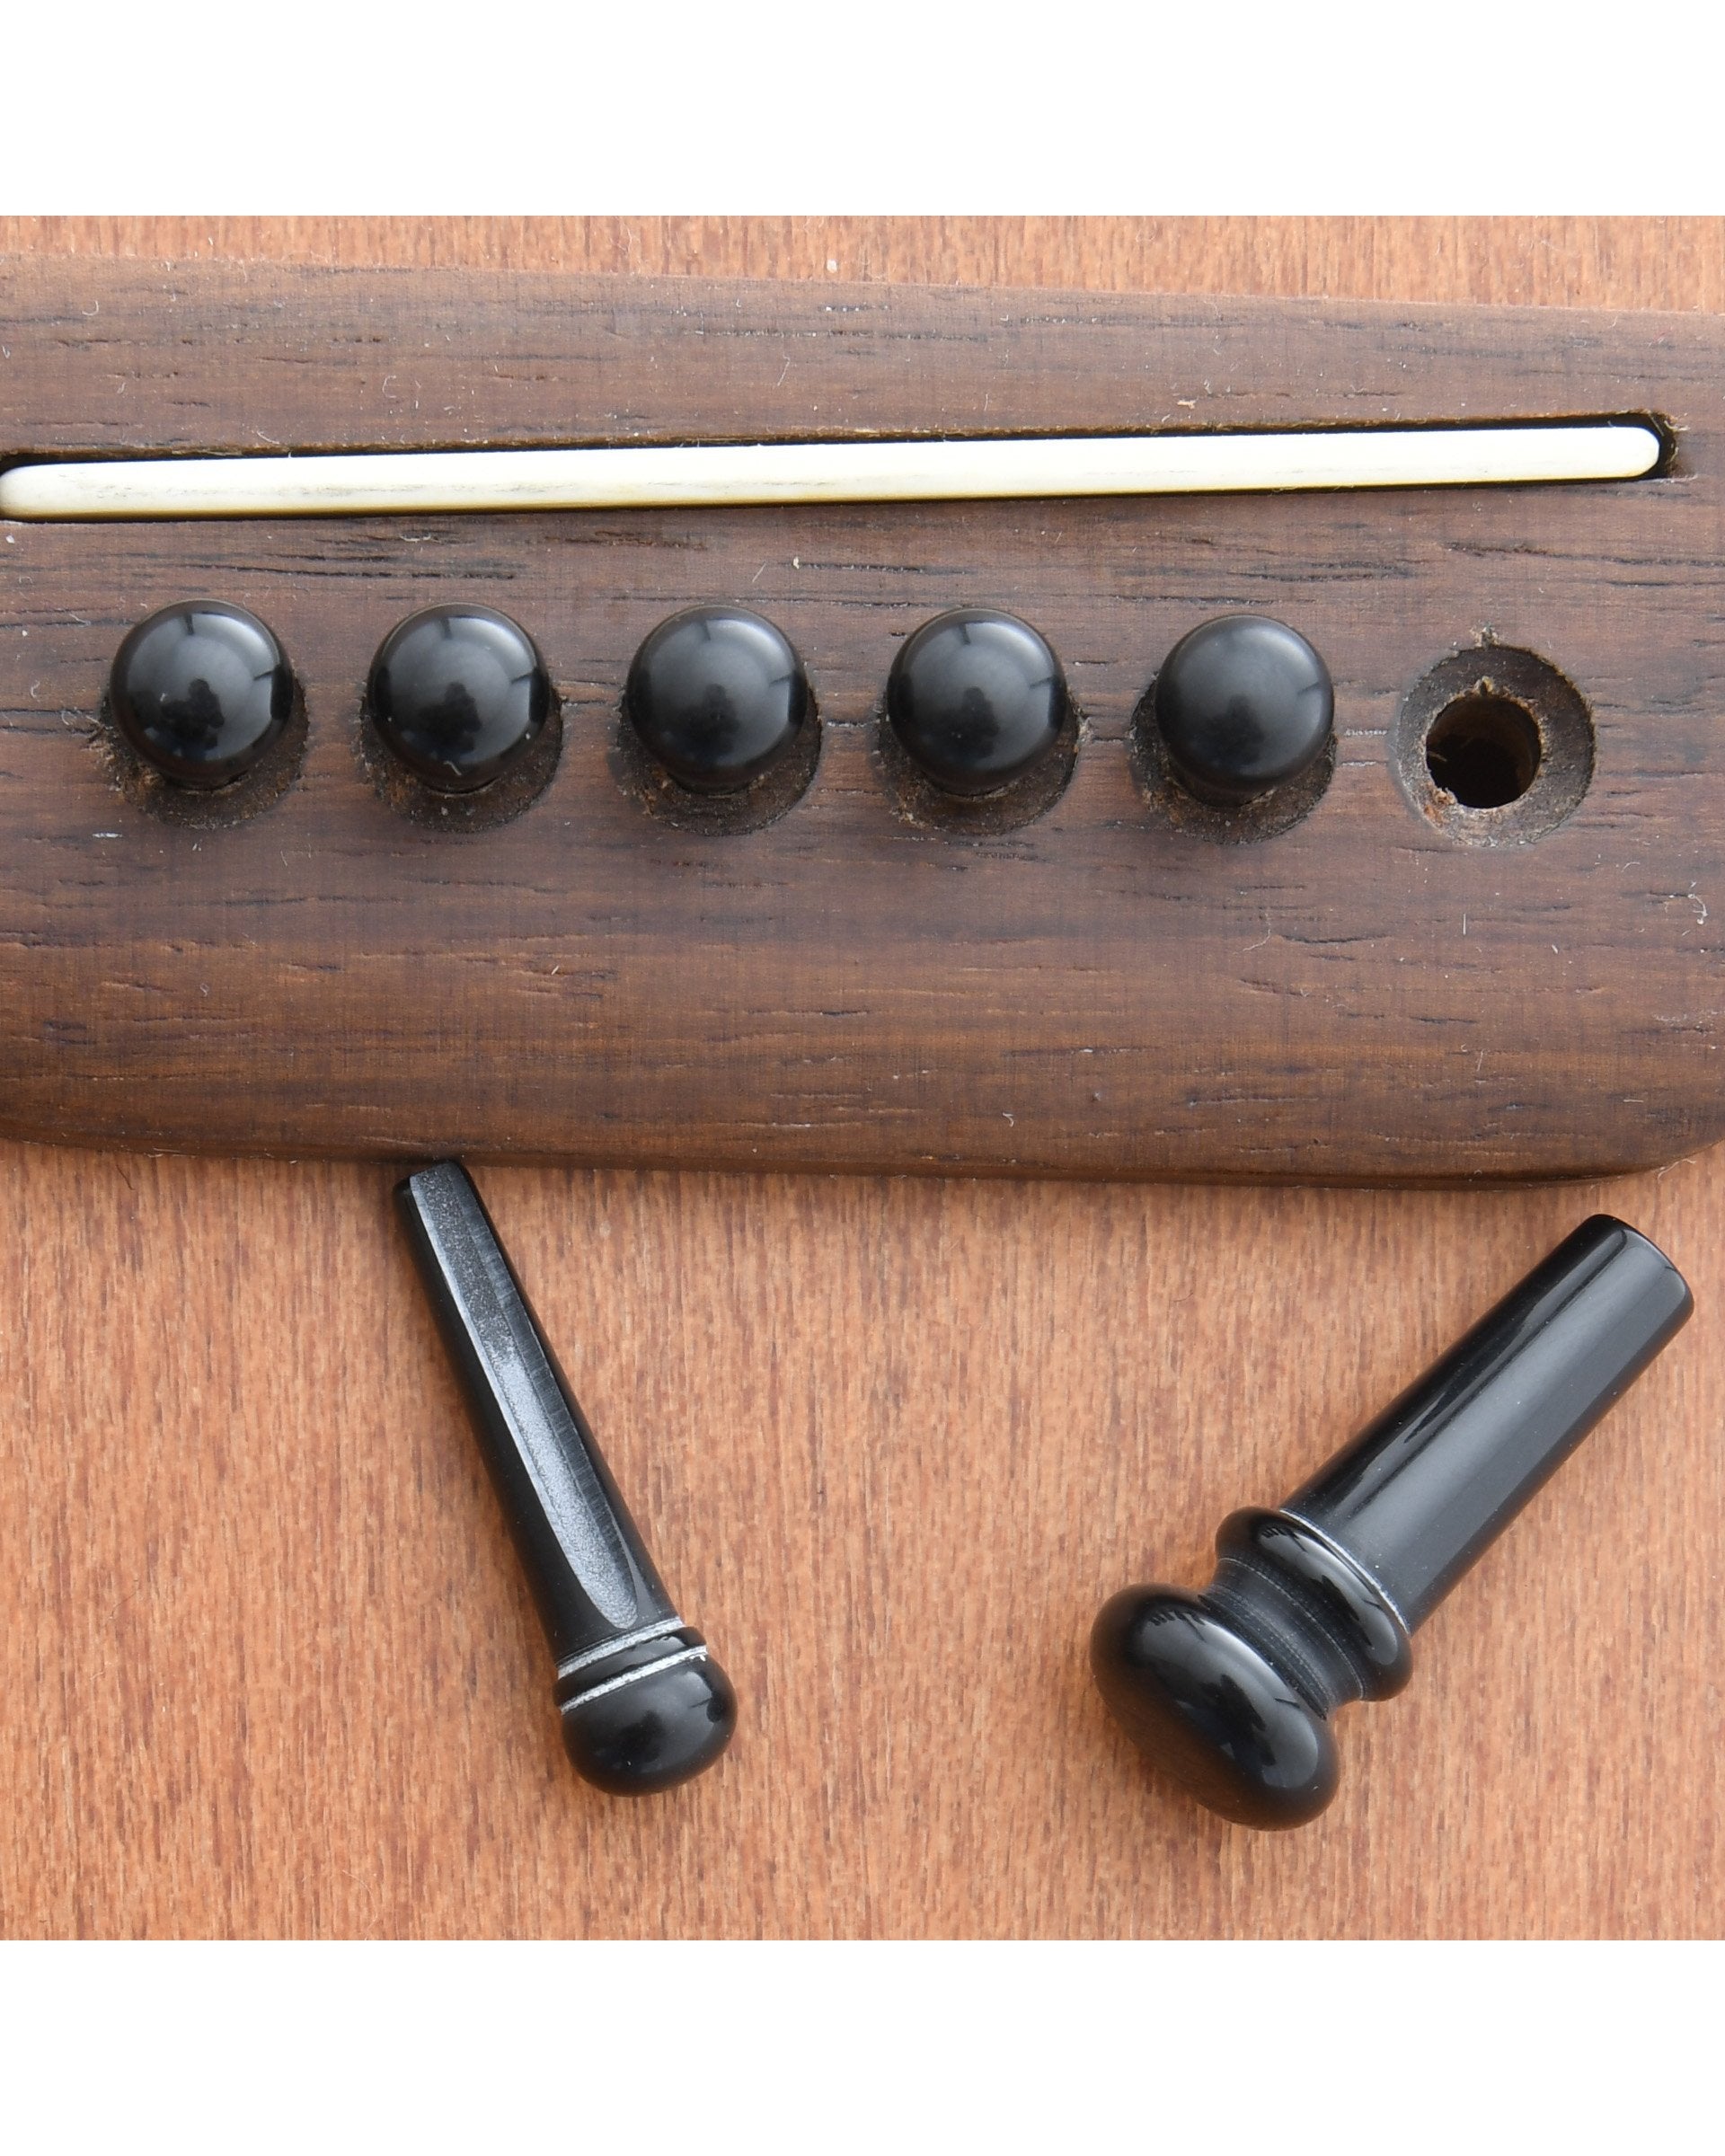 Antique Acoustics, Antique Acoustics Replica Gibson Guitar Pin Set, LG-0, LG-1, LG-2, J-45 (1946-1970's) - Slotted